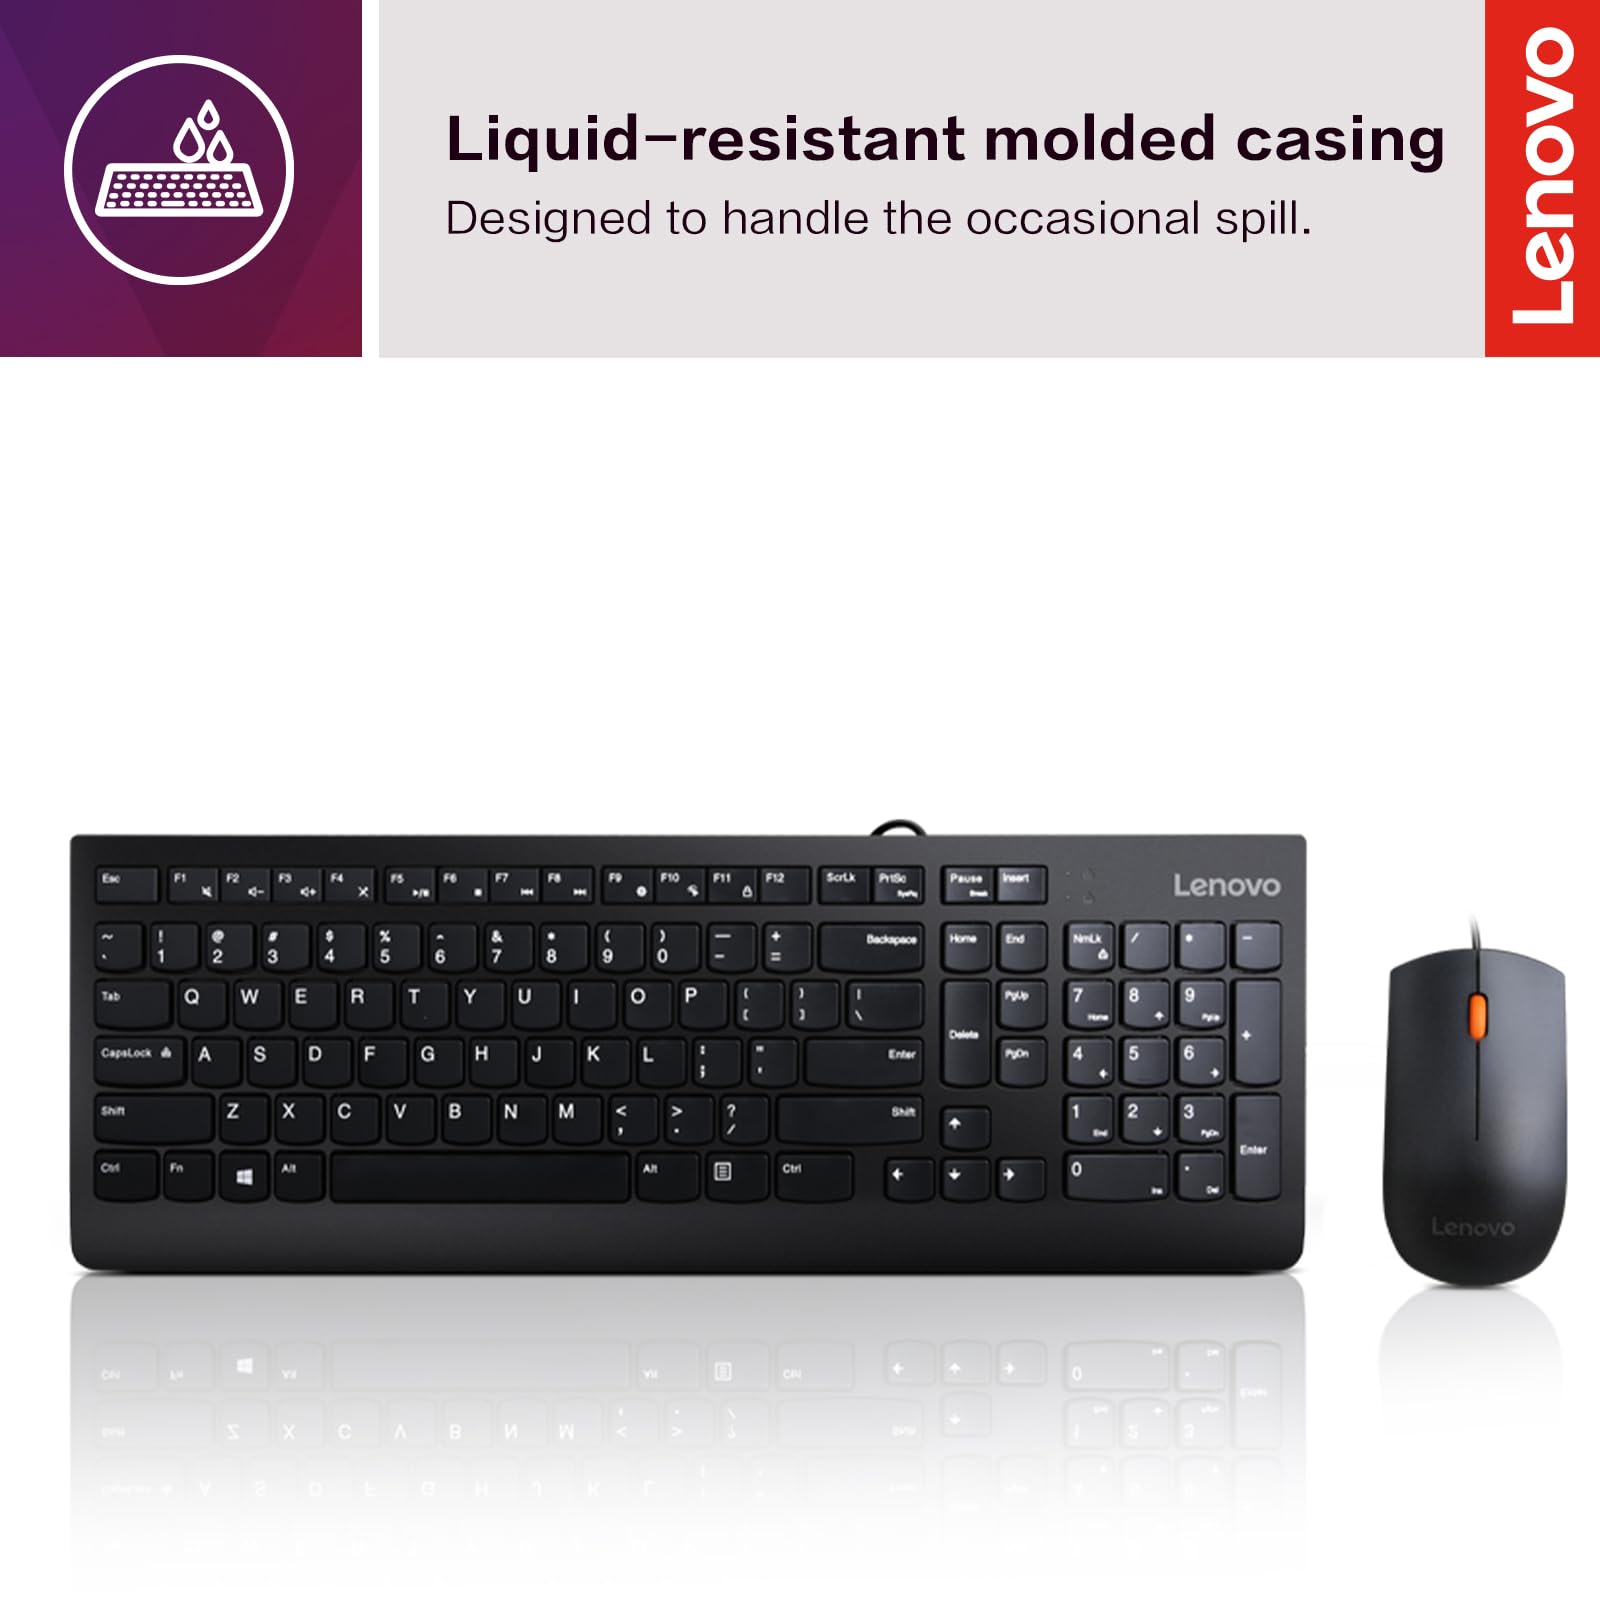 Lenovo 300 USB Combo, Full-Size Wired Keyboard & Mouse, Ergonomic, Optical Mouse, GX30M39606, Black for $12.13 on Amazon